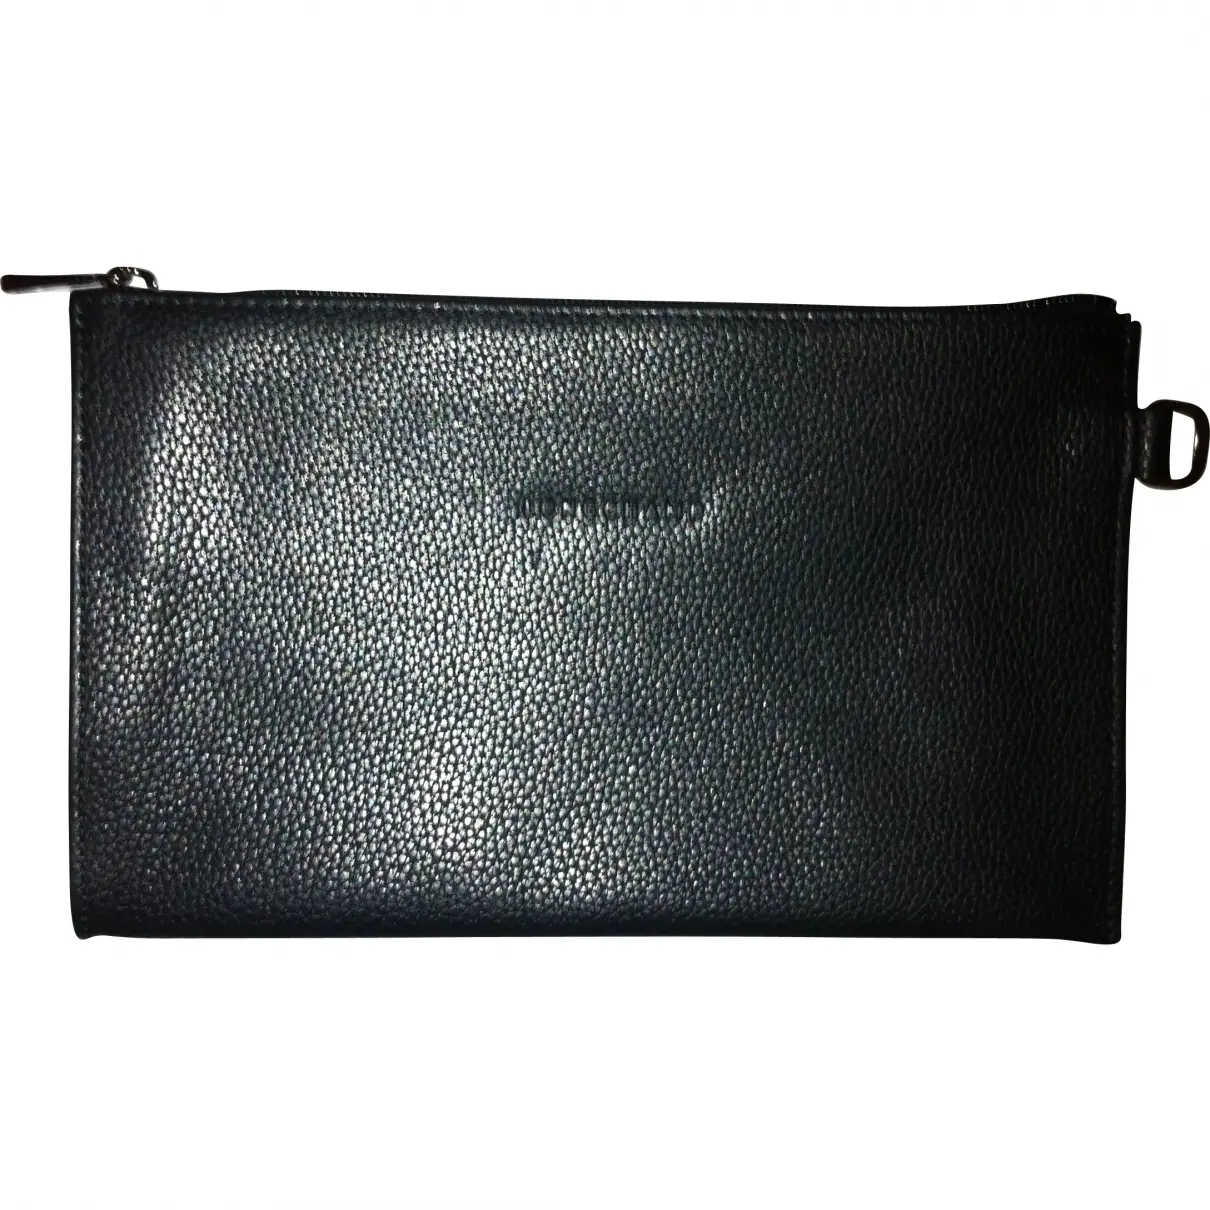 Black Leather Clutch bag Longchamp